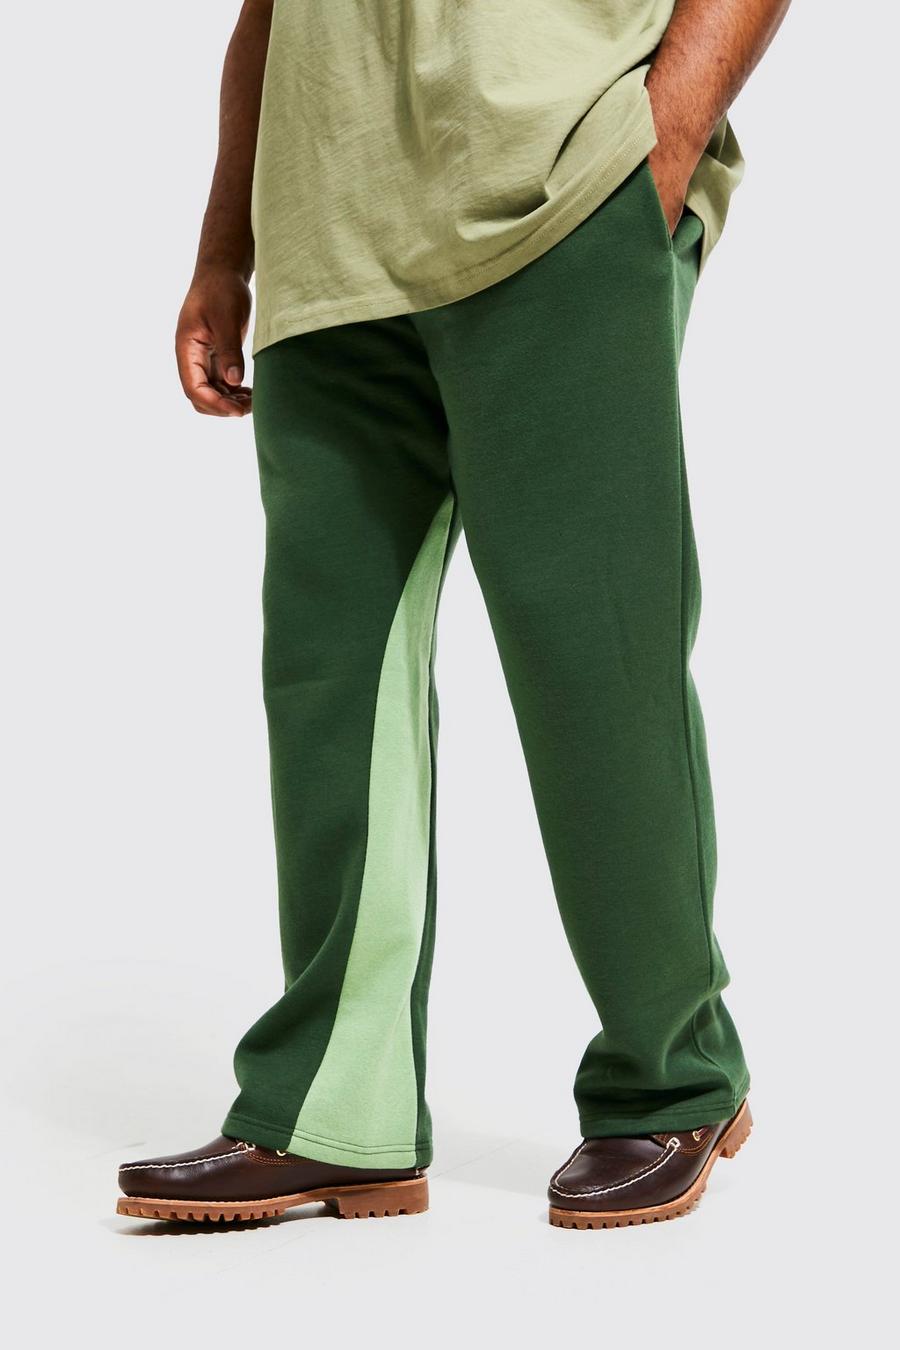 Pantalón deportivo Plus Regular con panel y refuerzo, Khaki kaki image number 1